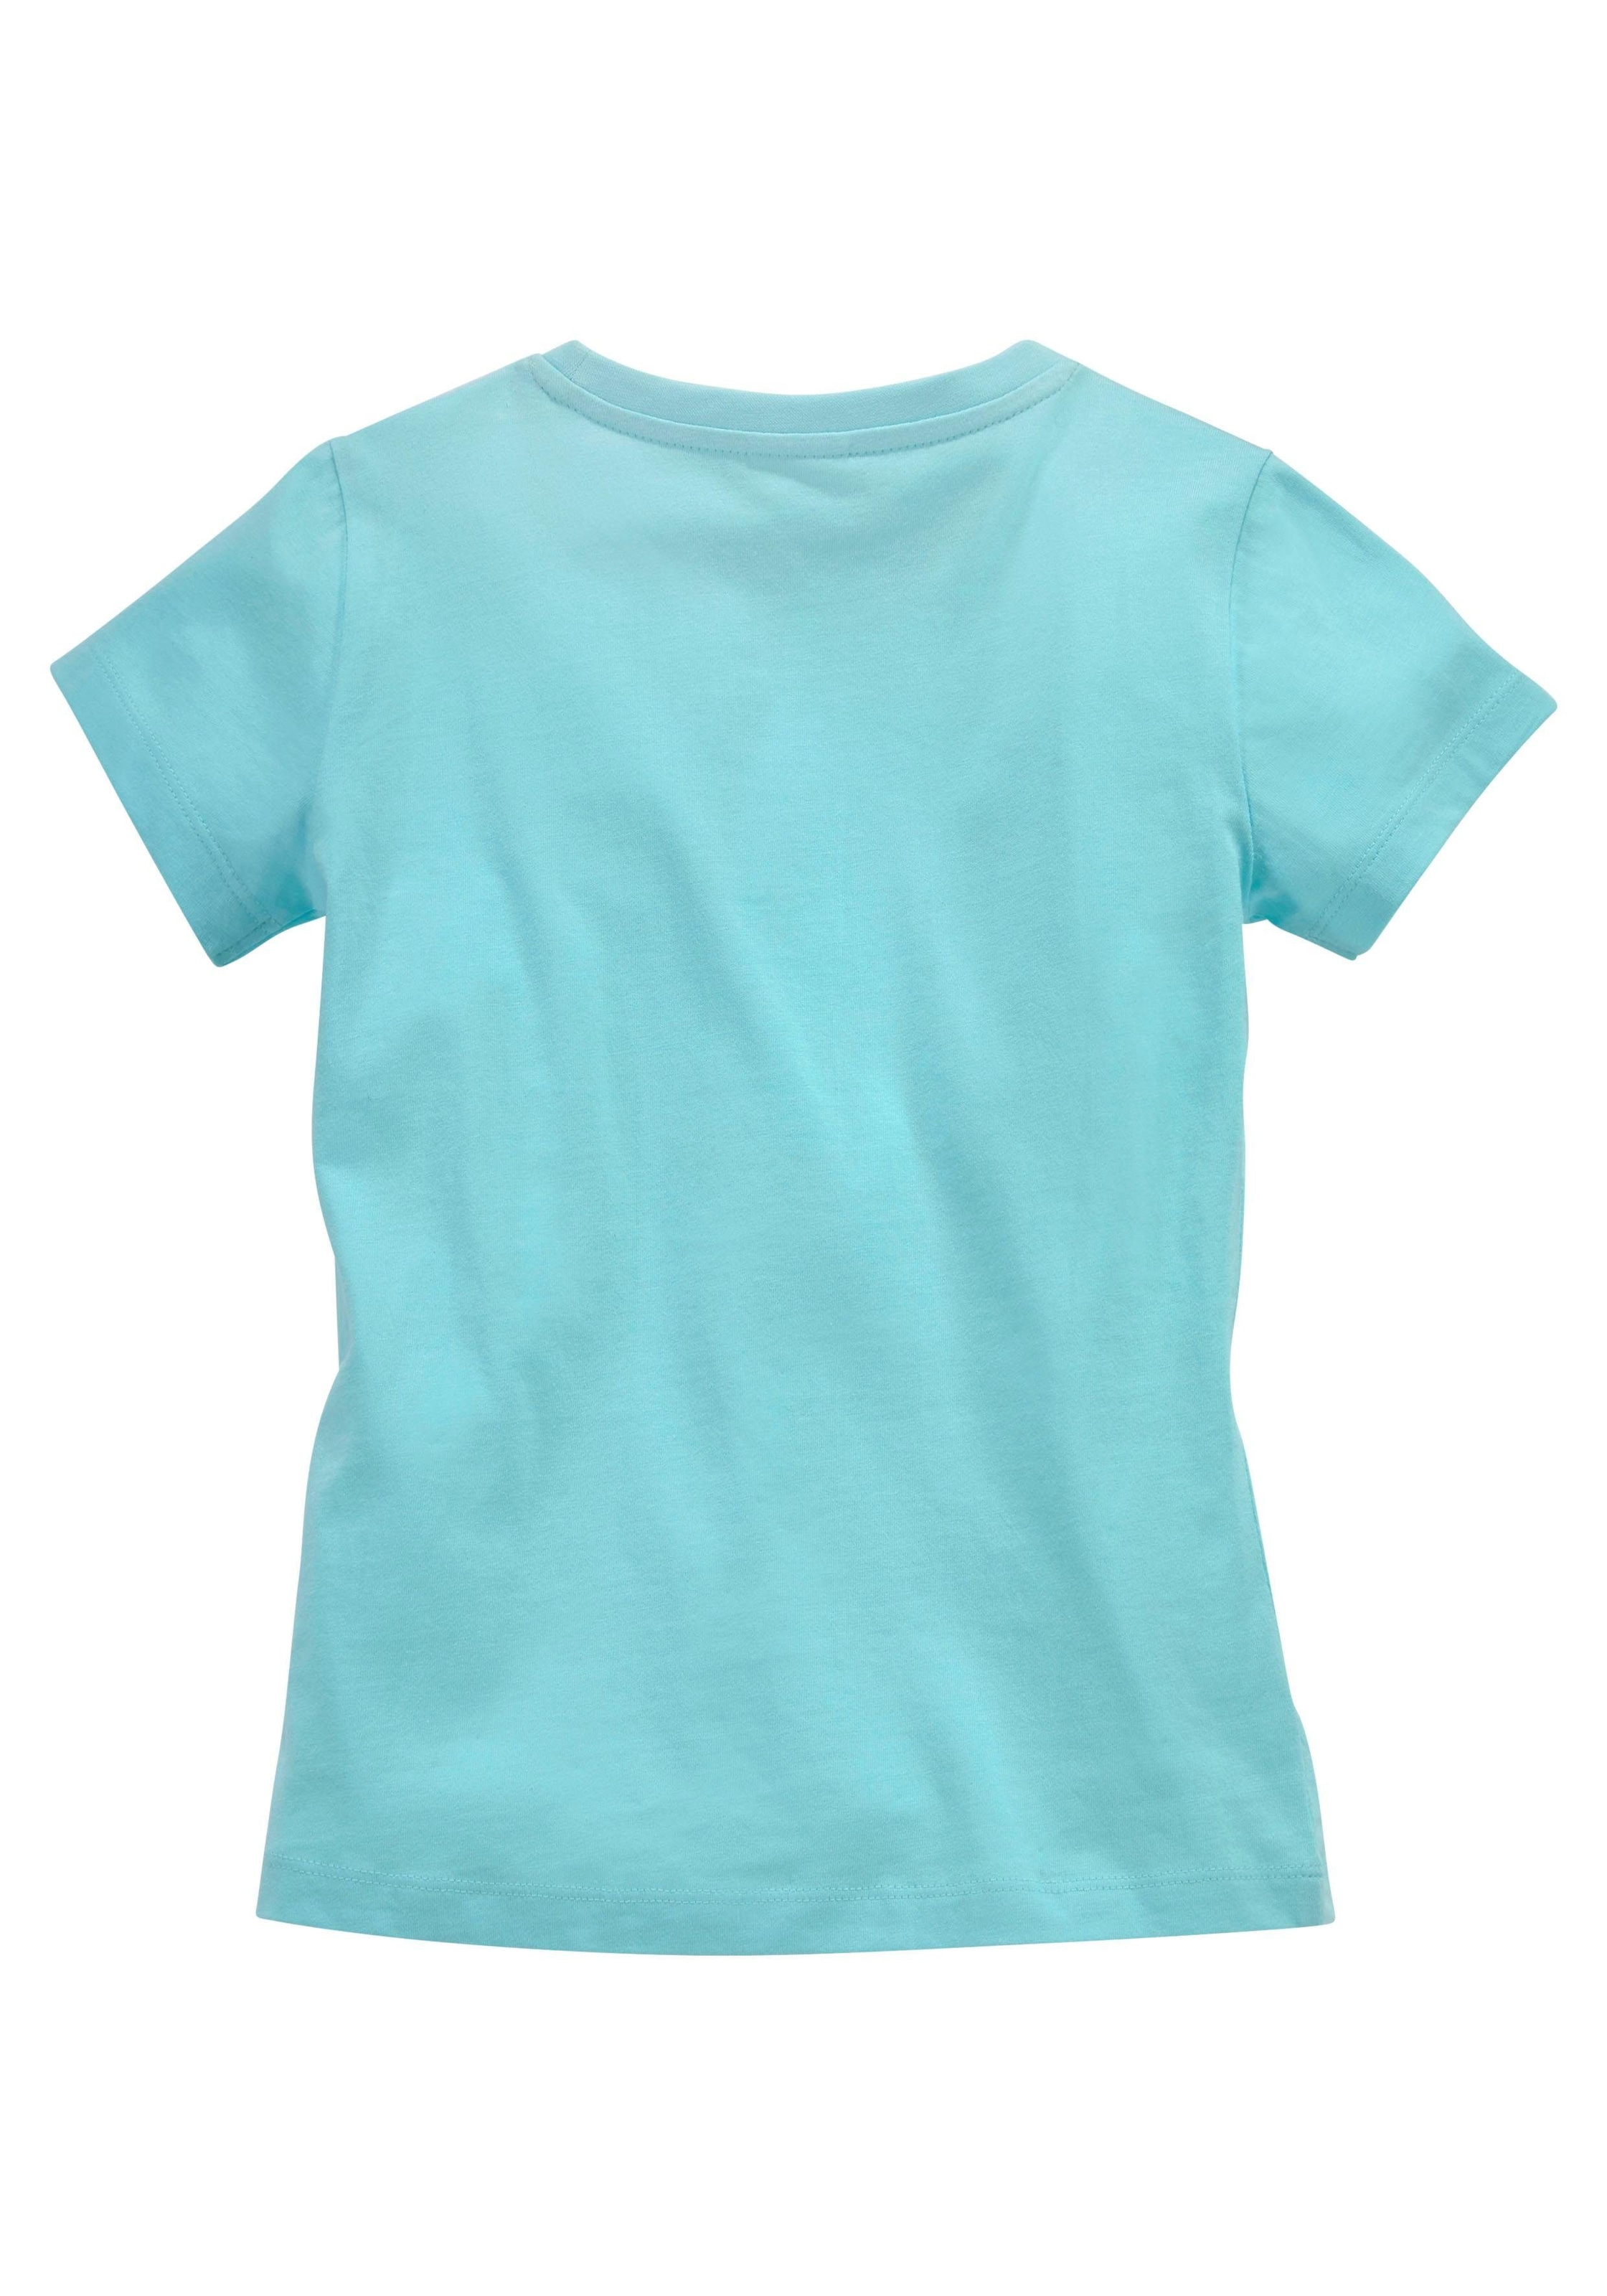 Trendige KangaROOS T-Shirt, Mindestbestellwert Paillettenapplikation mit ohne shoppen